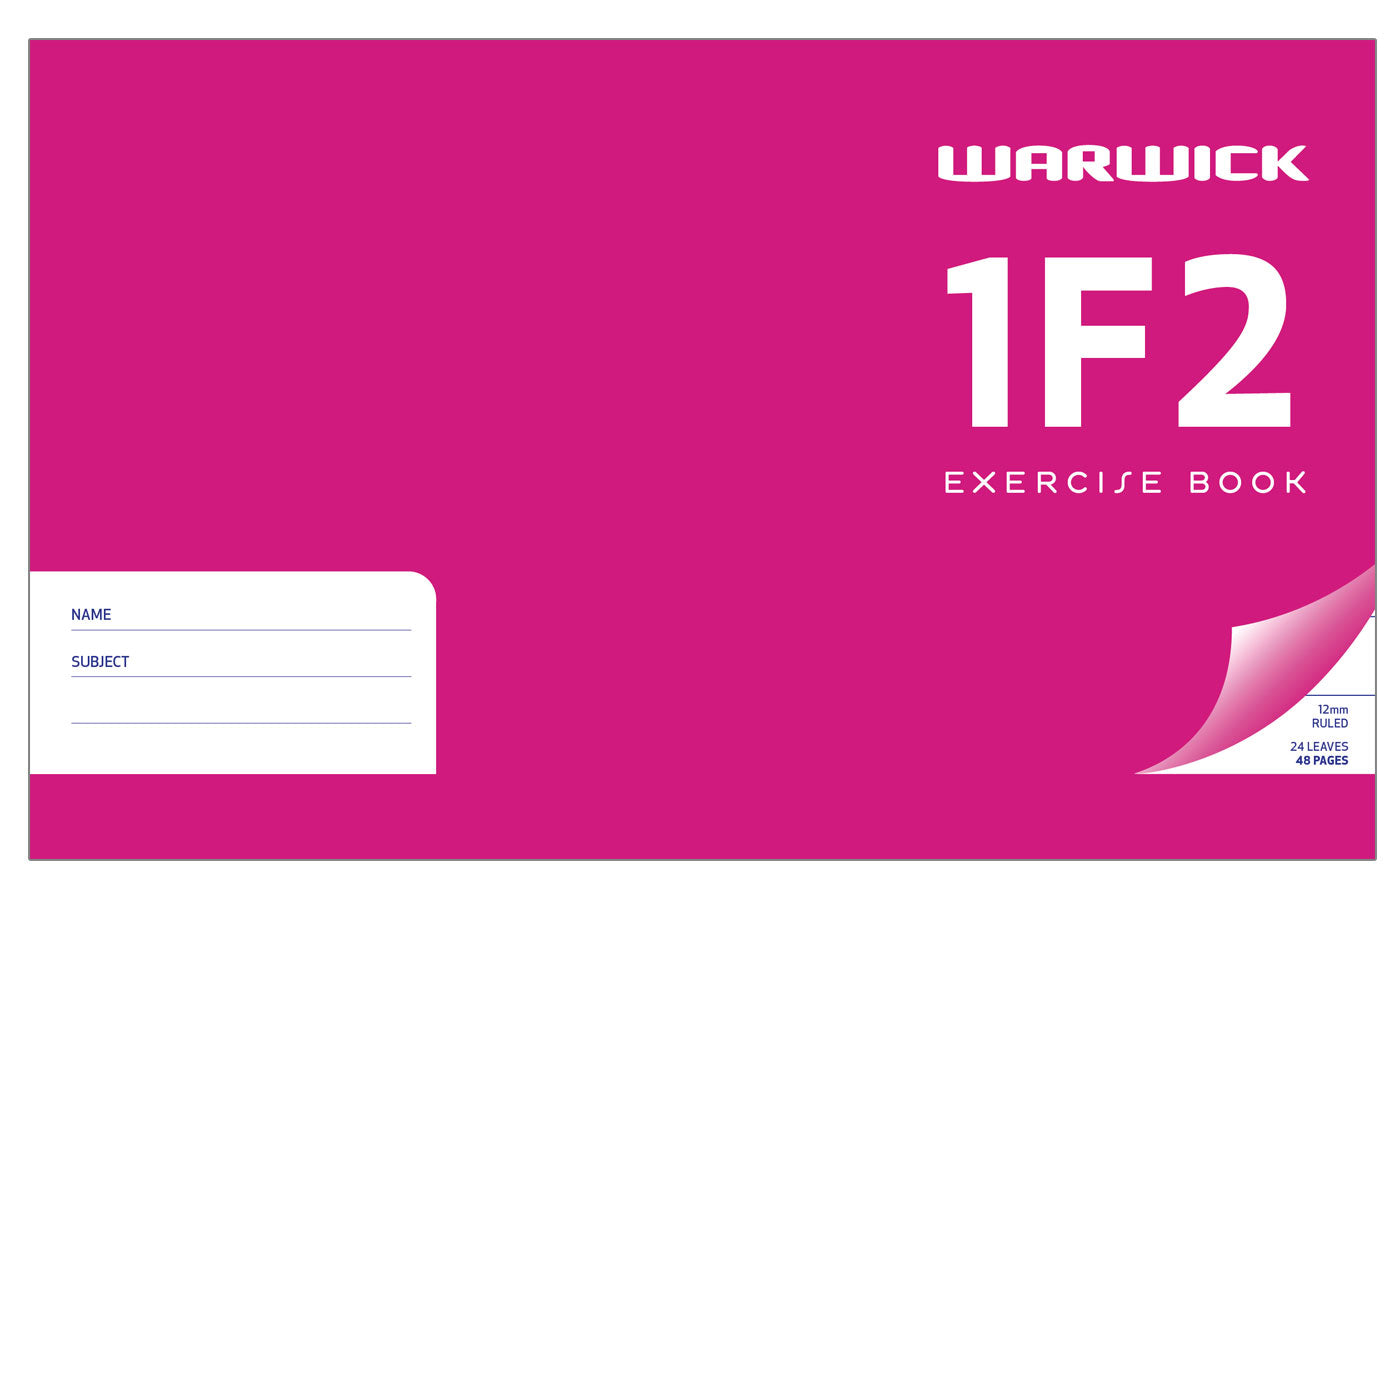 WARWICK EXERCISE BOOK 1F2 24 LEAF RULED 12MM 125X202MM